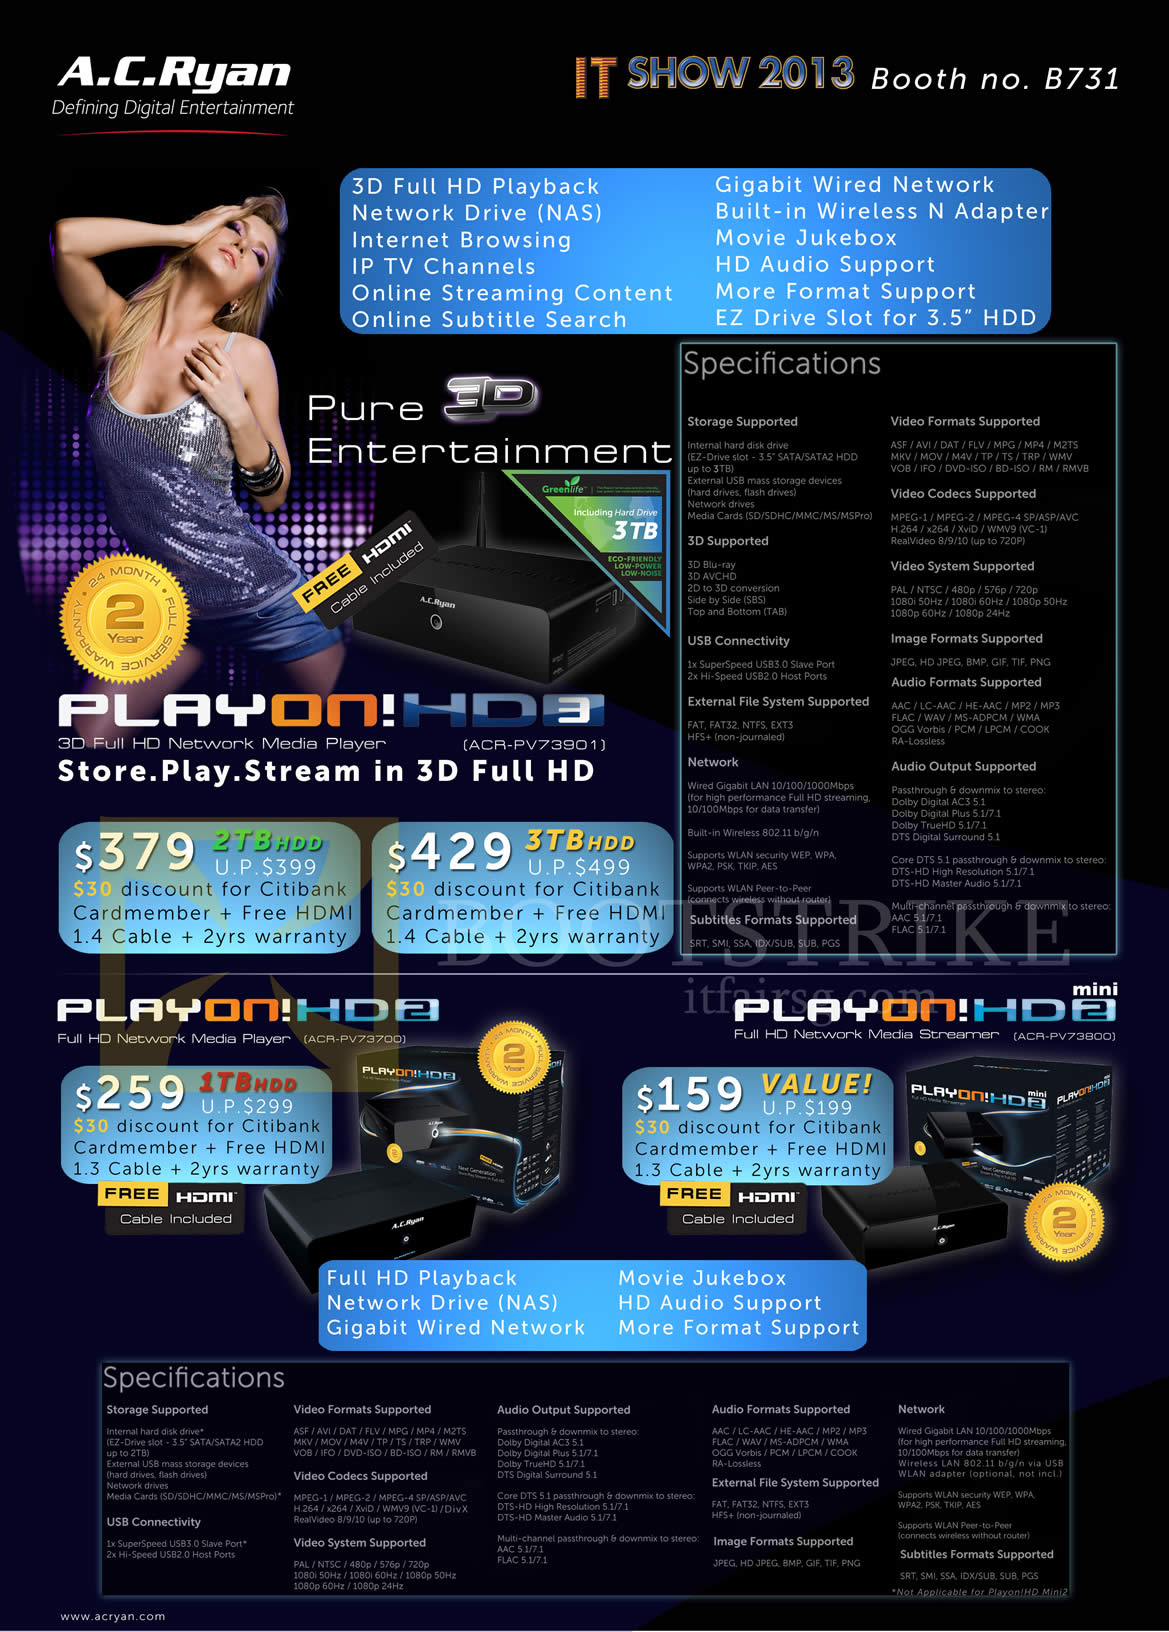 IT SHOW 2013 price list image brochure of AC Ryan Media Player Playon HD3 ACR-PV73901, Playon HD2 ACR-PV73700, Playon HD2 Mini ACR-PV73800